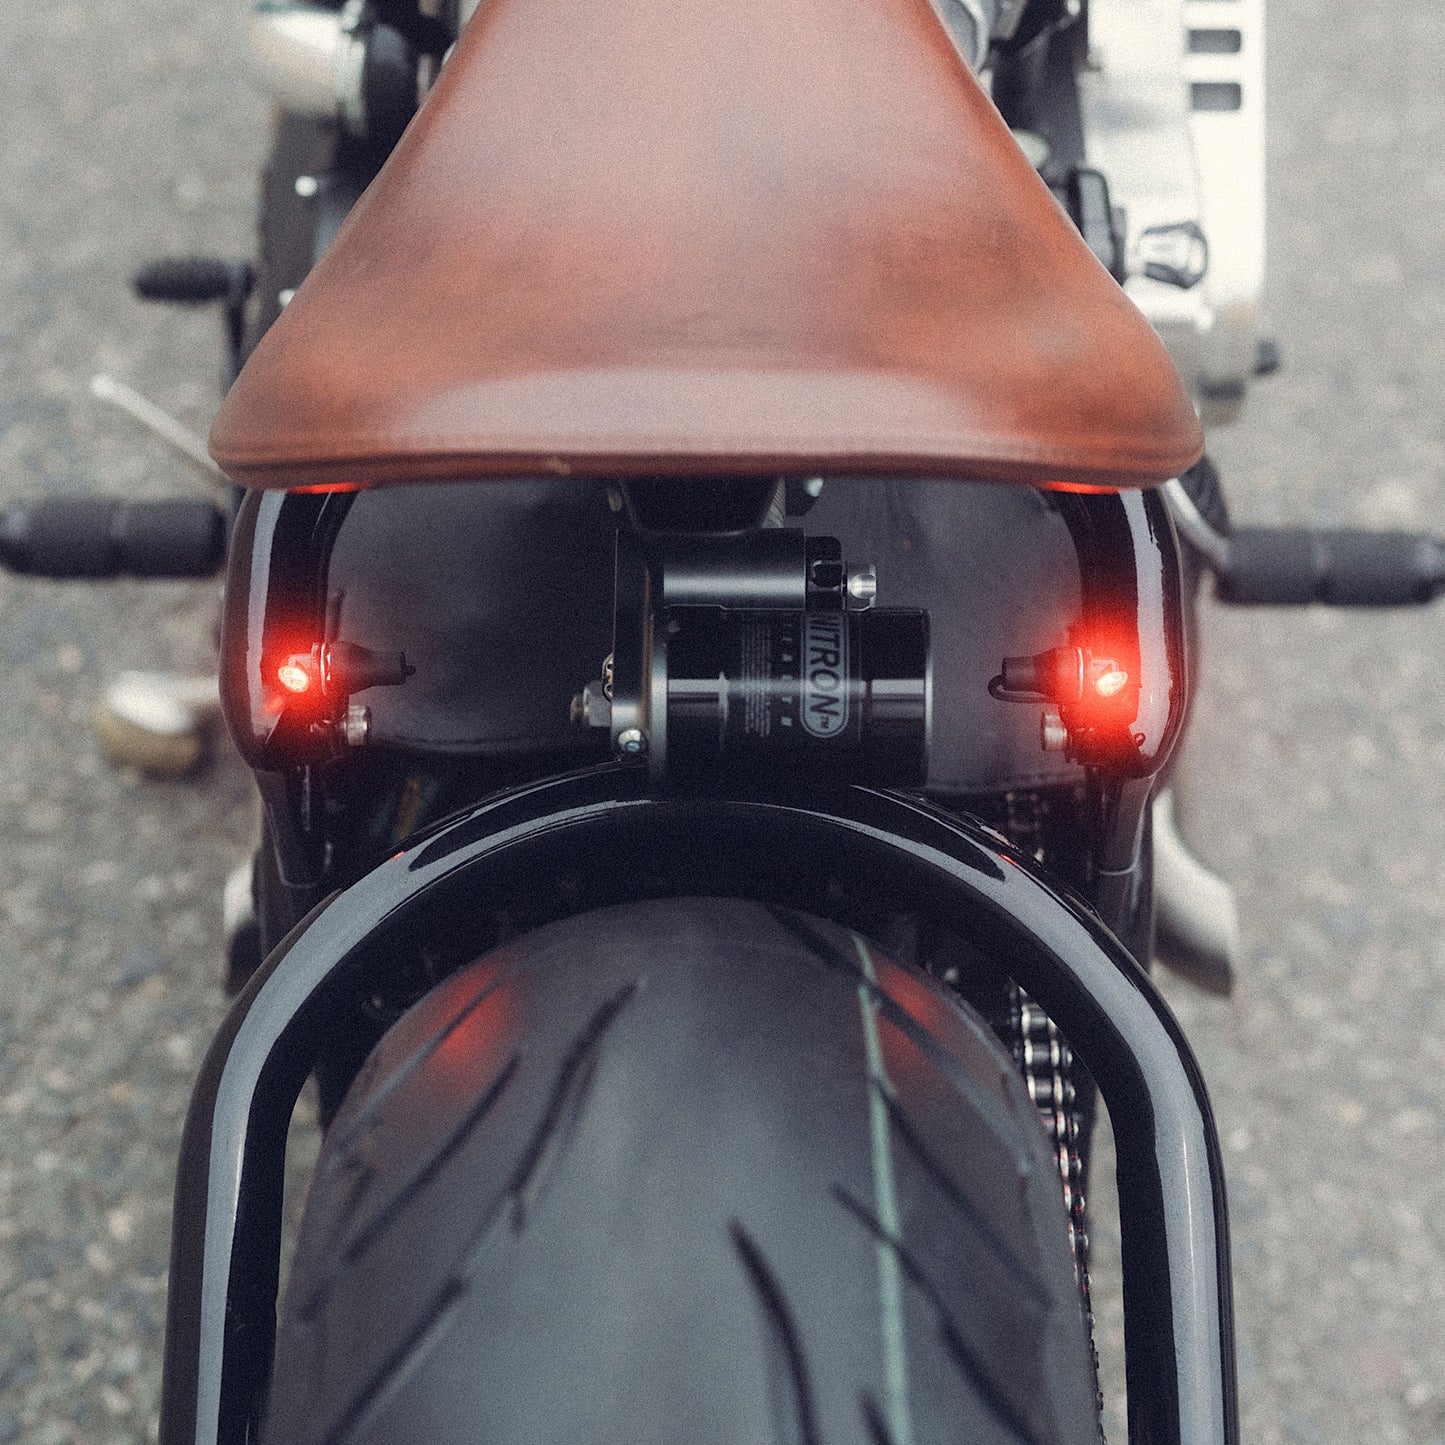 Motogadget mo.blaze Tens3 LED Turn Signals - 3 in 1 Run / Brake / Turn - Pair